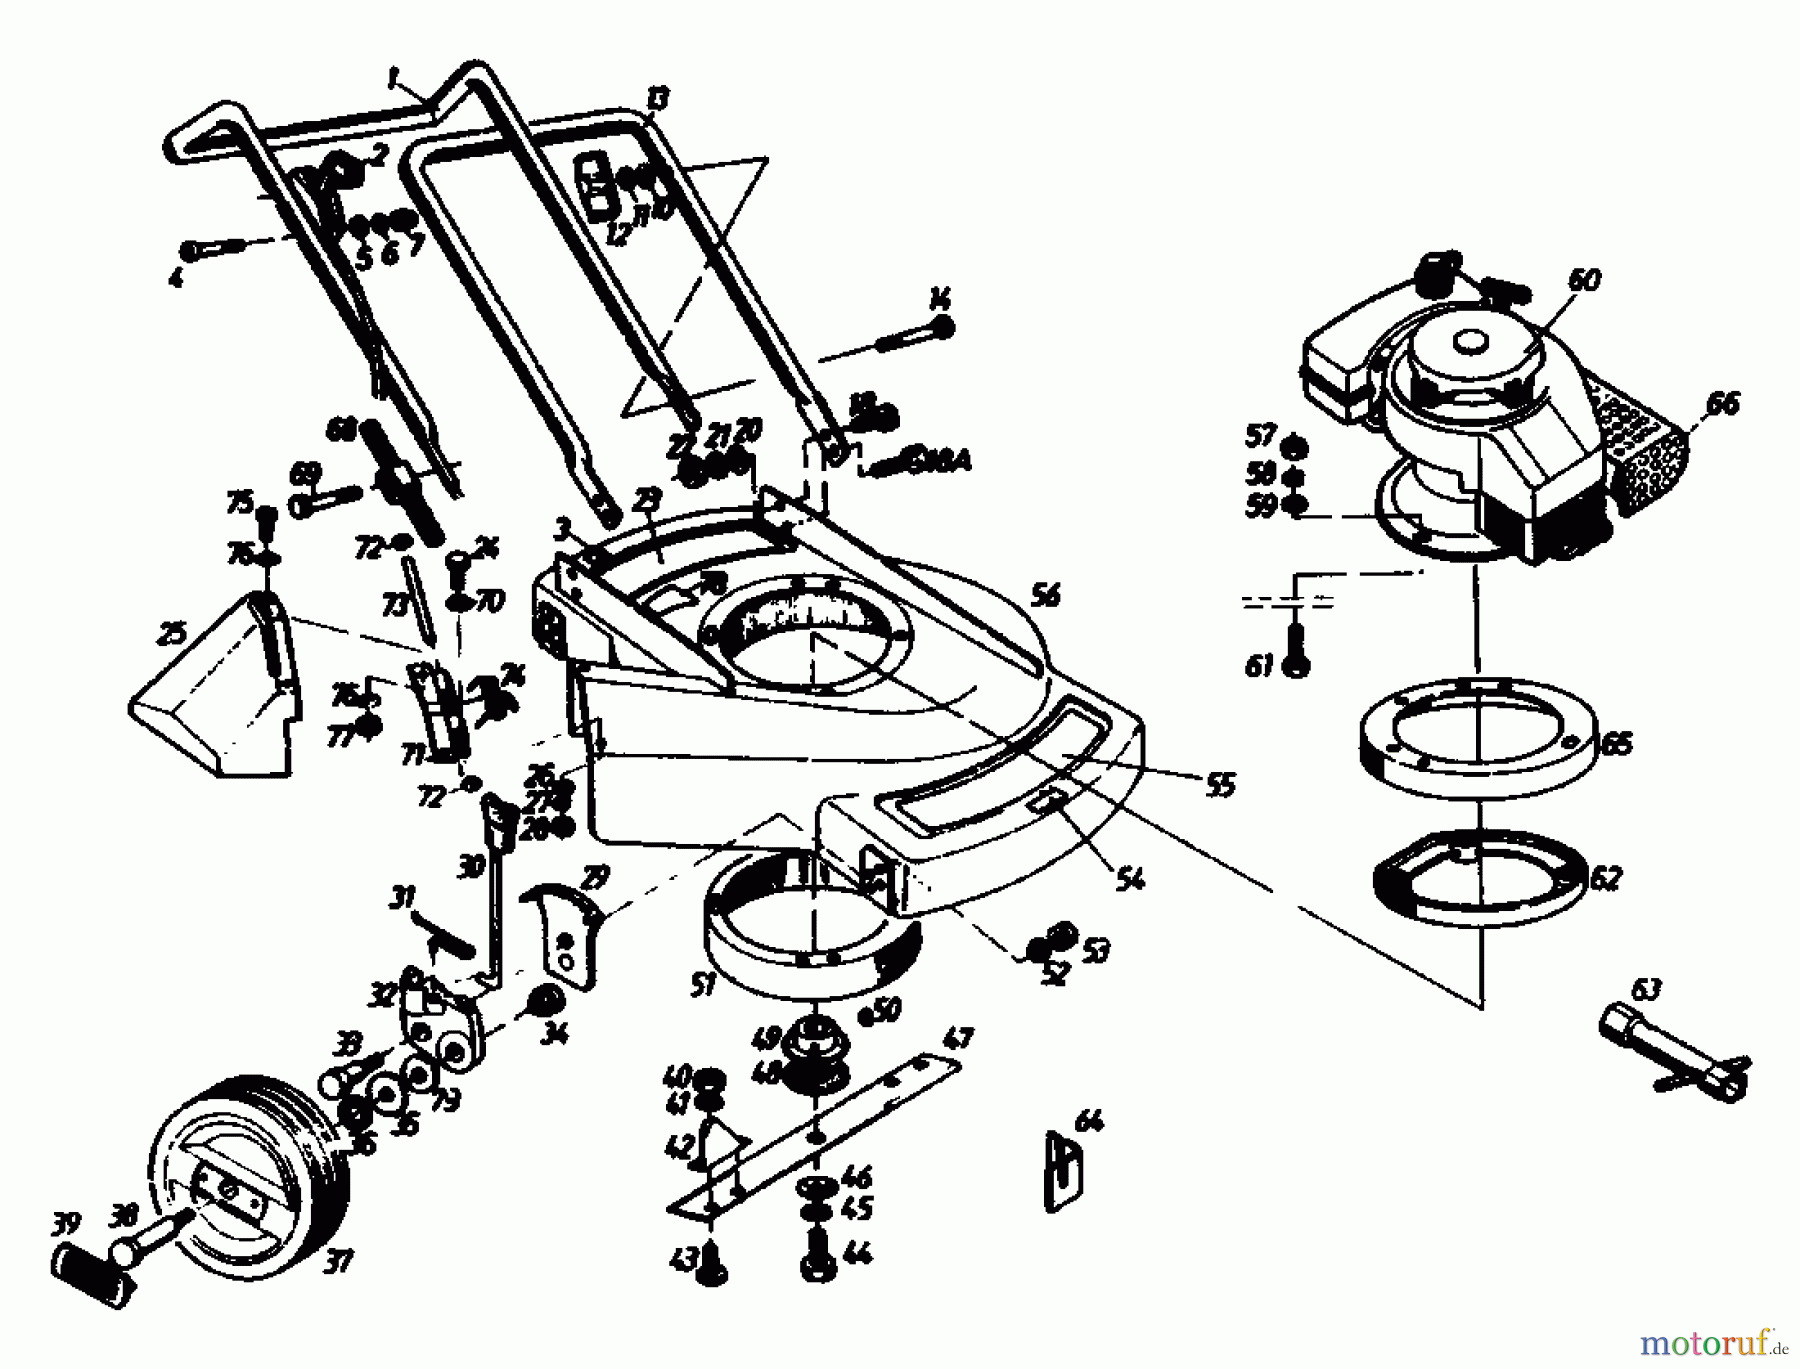  Gutbrod Motormäher 135 BL 2 T 02869.06  (1989) Grundgerät